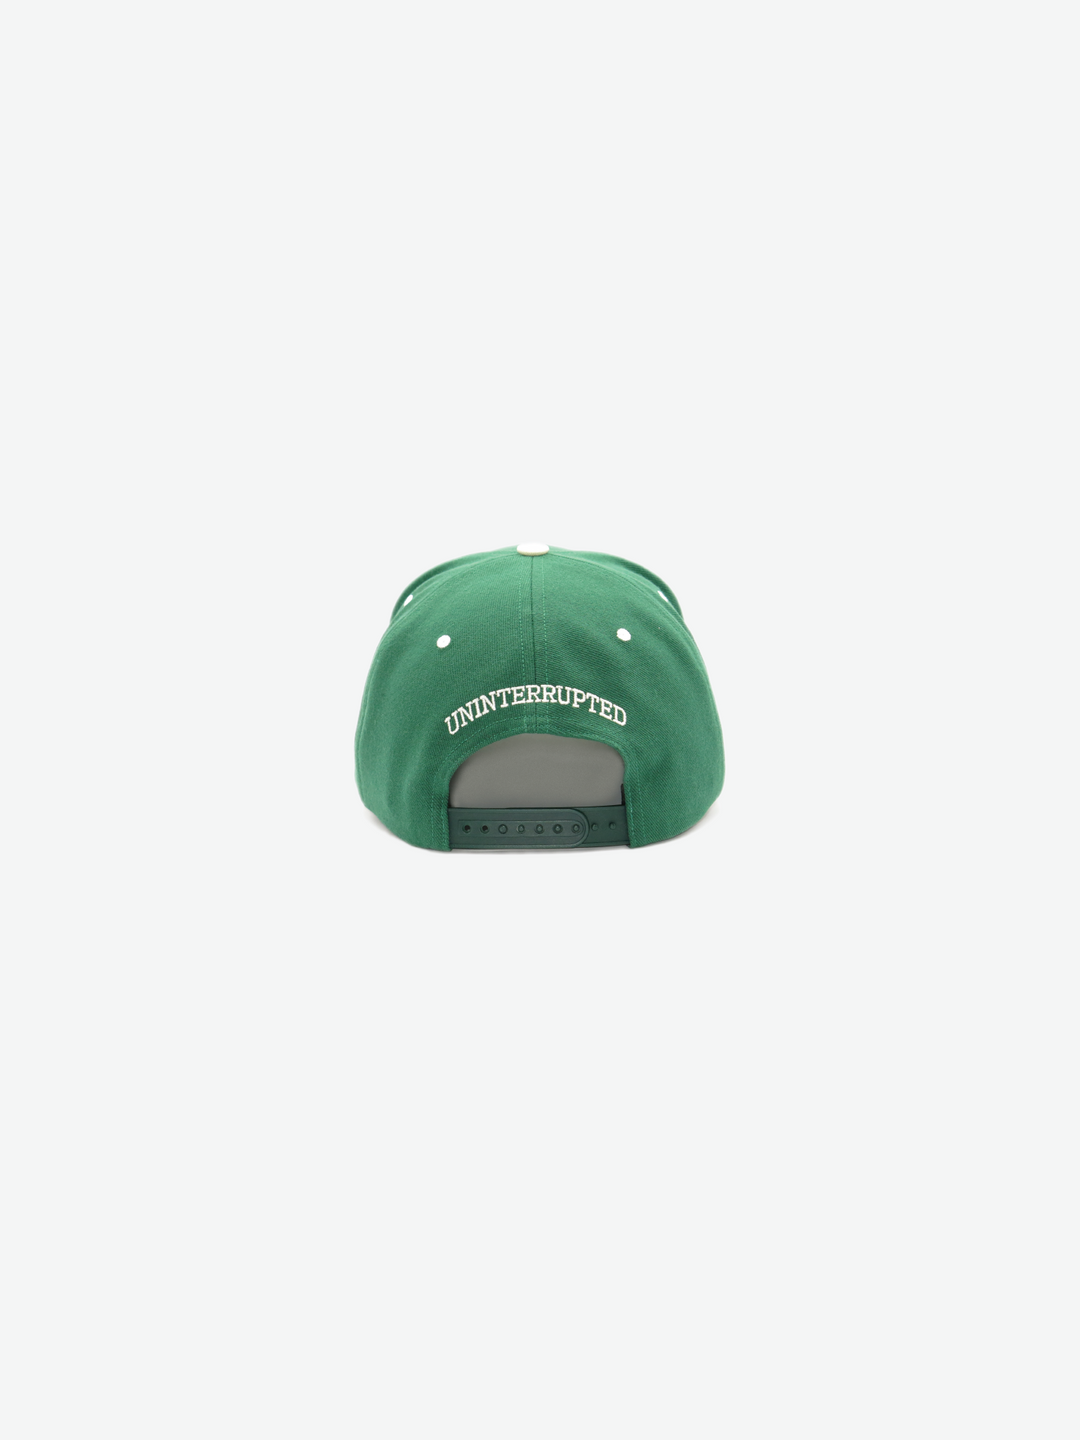 Chosen UN Snapback Hat Emerald Green